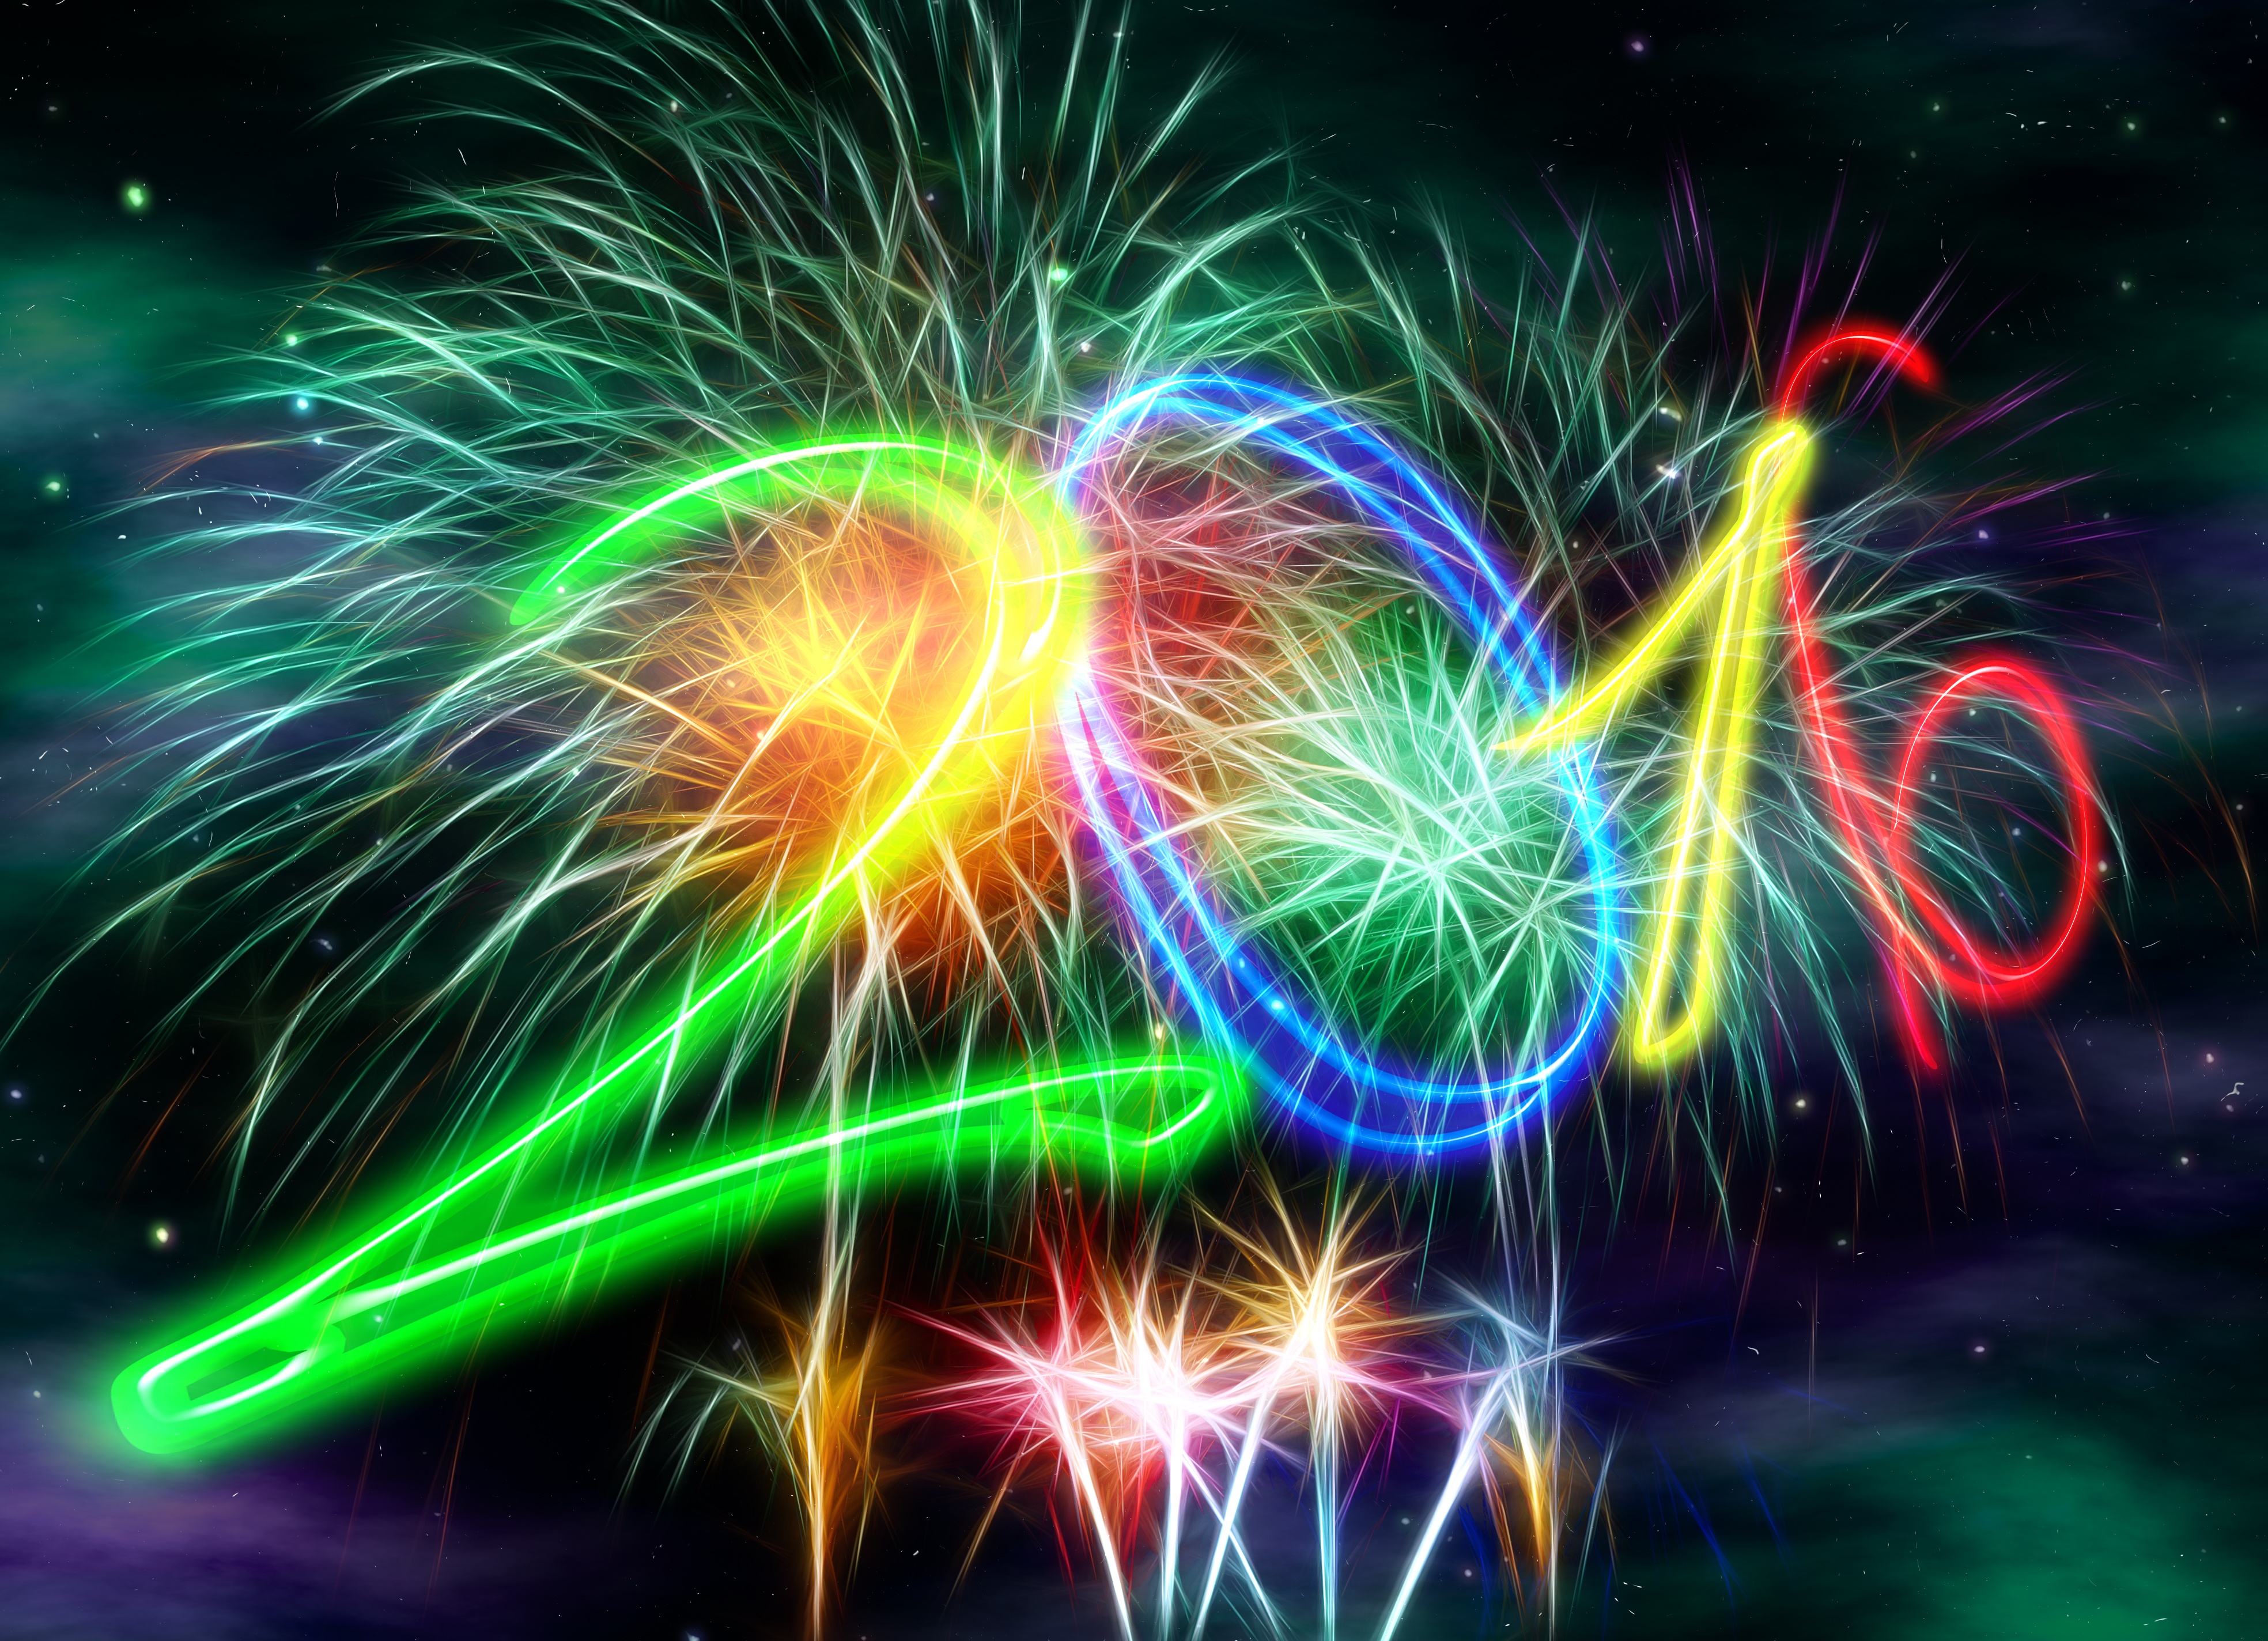 New Year 2016, make it explode in fireworks by Gerd Altmann